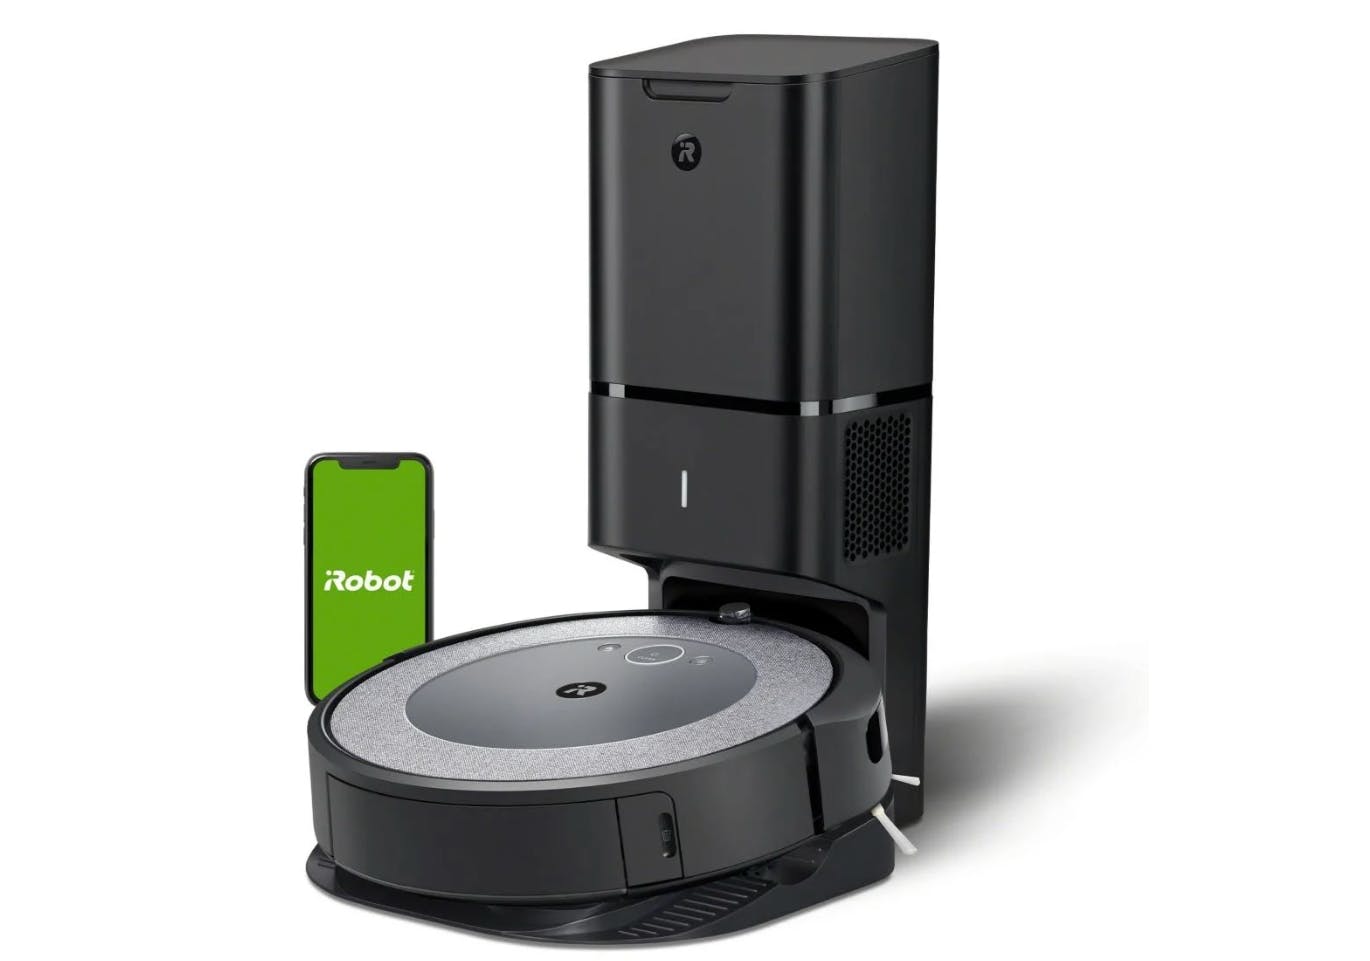 The iRobot Roomba i3 Wi-Fi Robot Vacuum + Automatic Dirt Disposal.